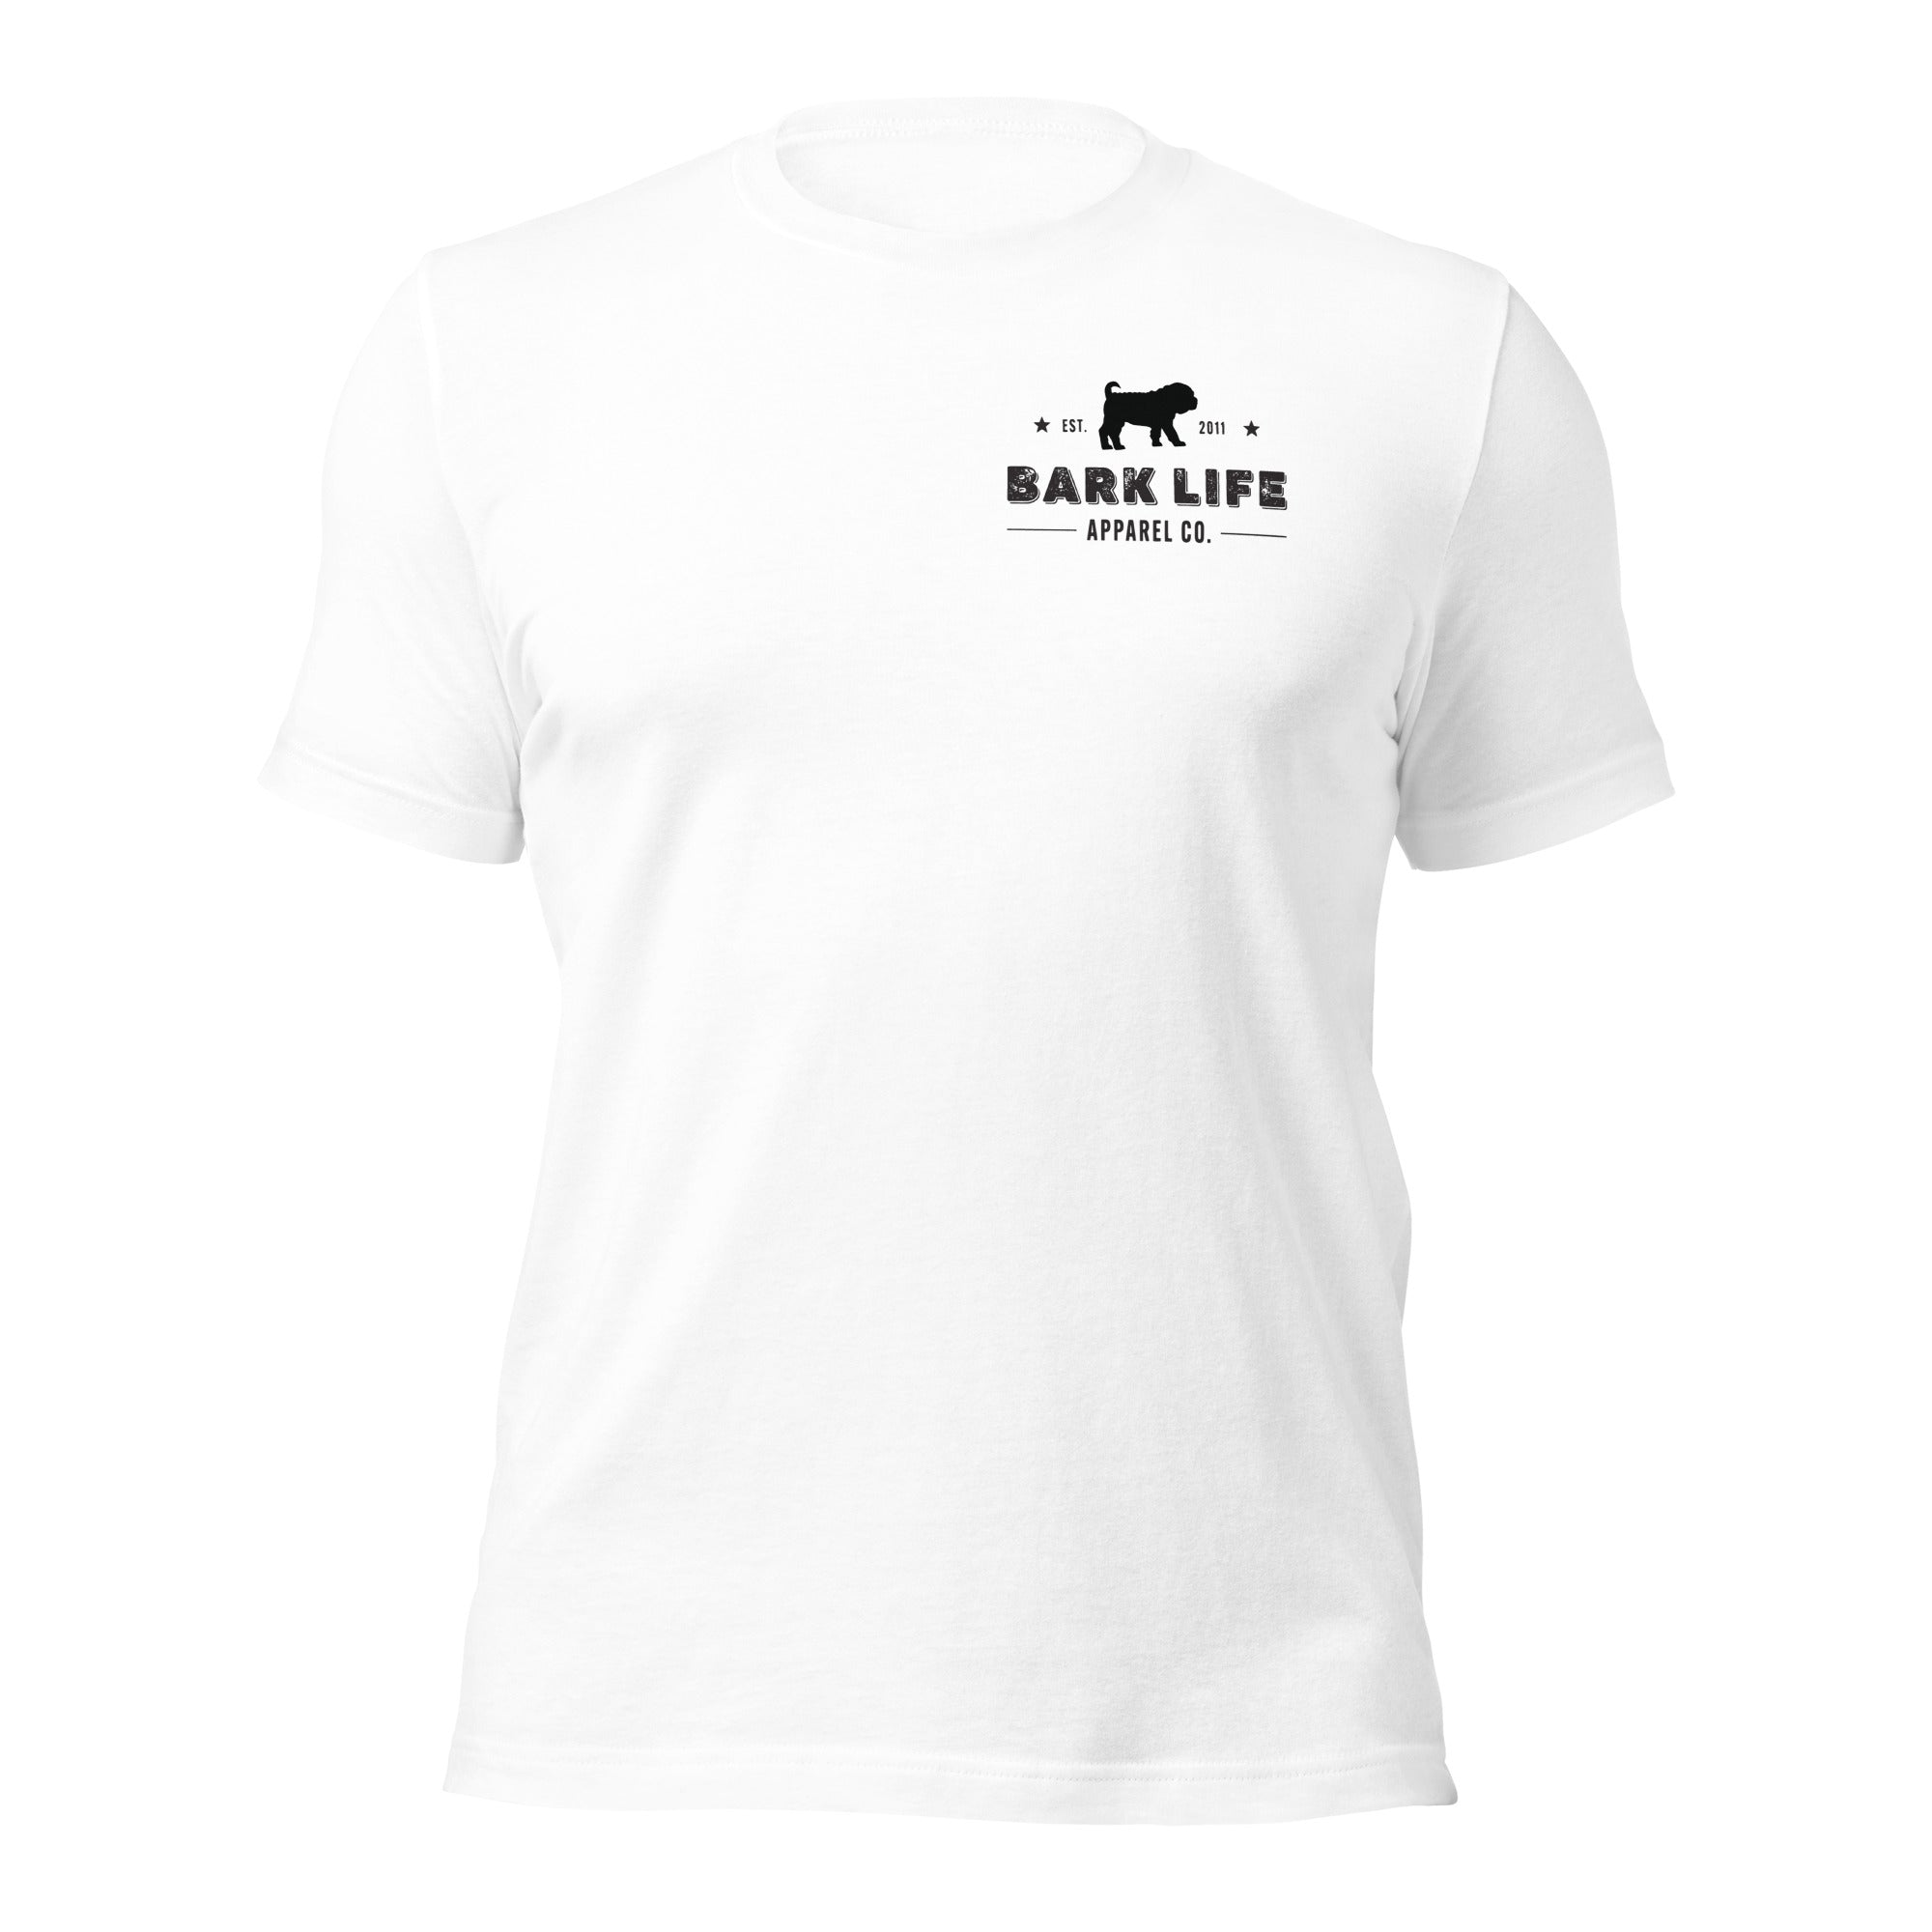 Sharpei - Short Sleeve Cotton Tee  Shirt